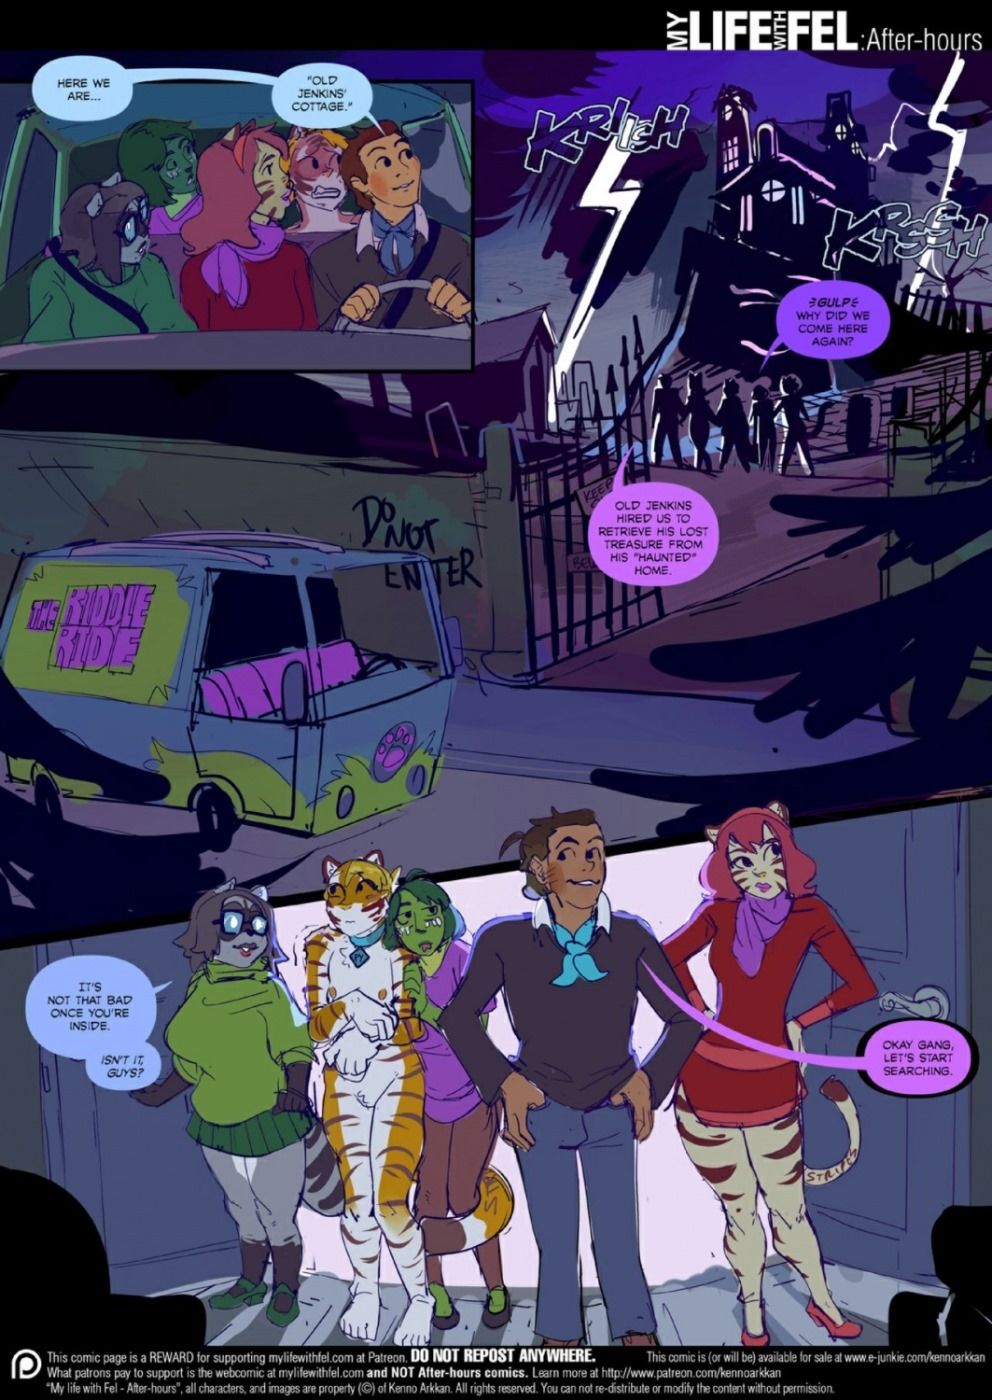 [KennoArkkan] Pawsy-Doo Where are you!,Scooby Doo page 2